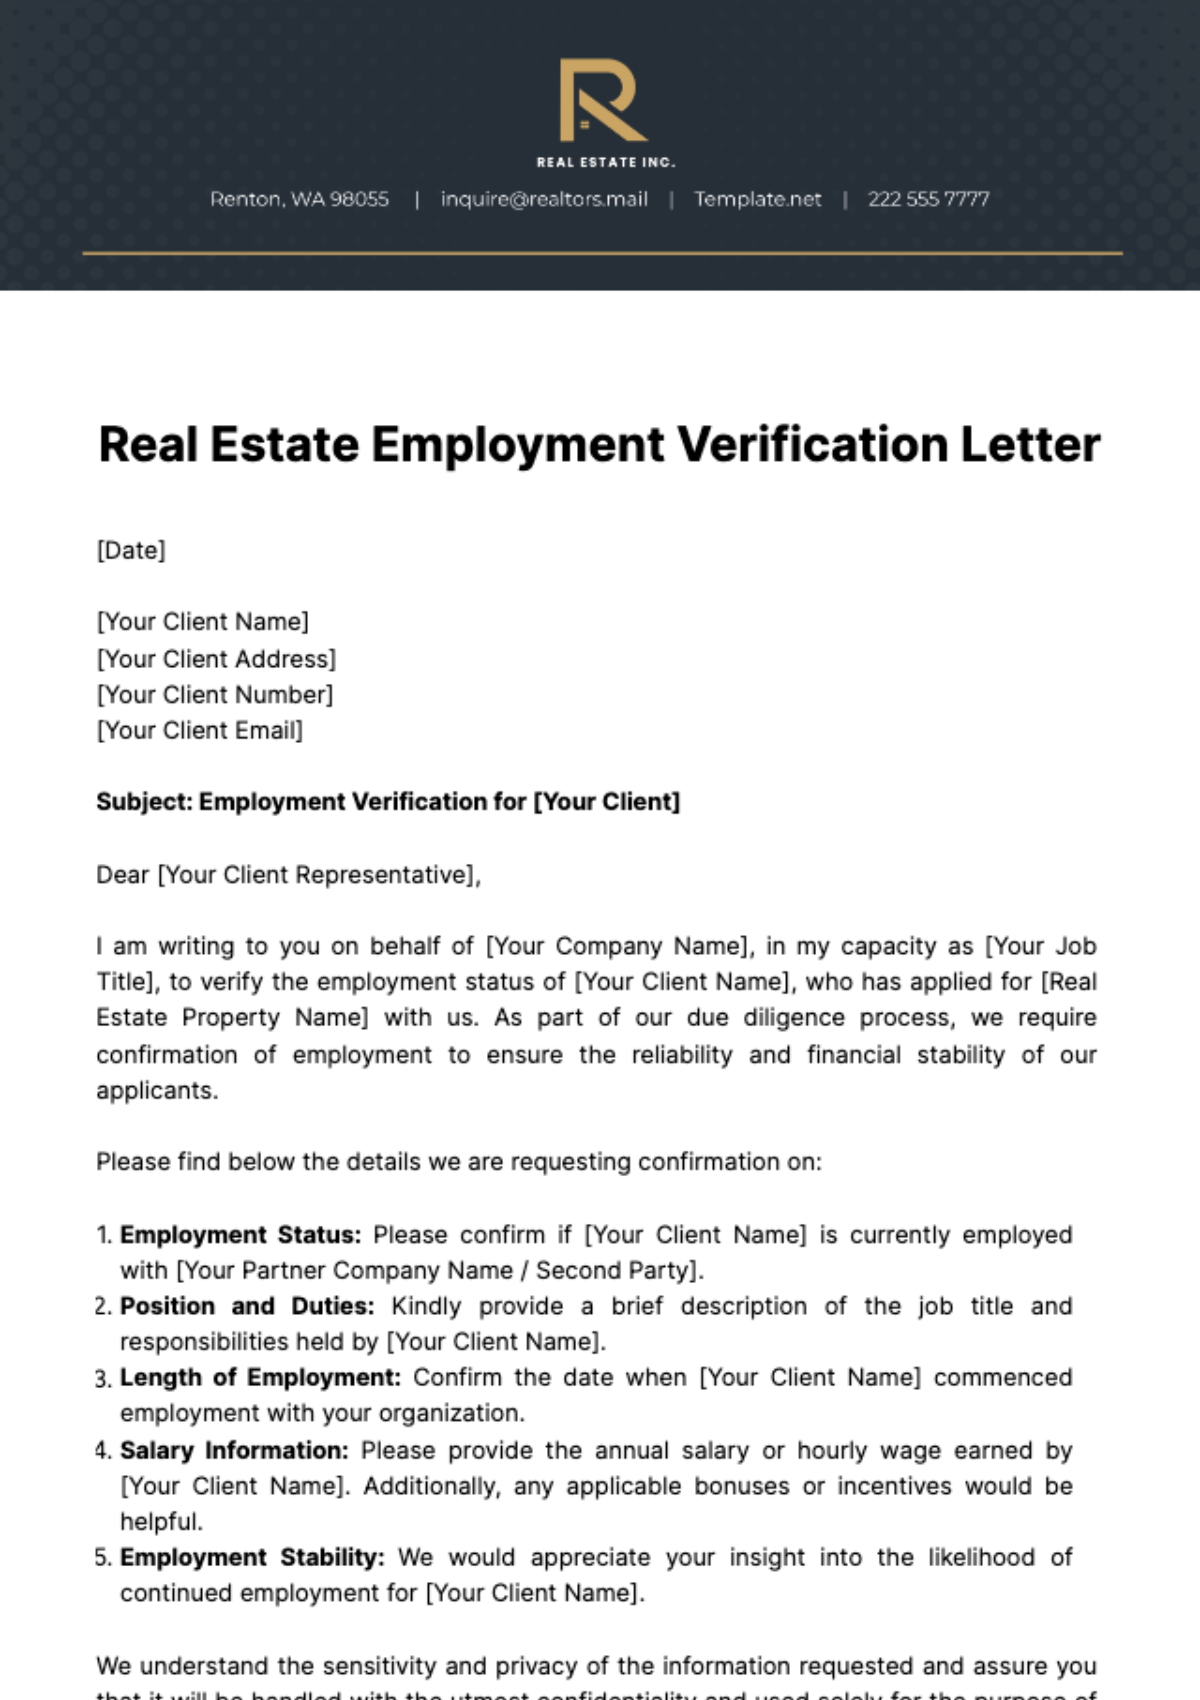 Real Estate Employment Verification Letter Template